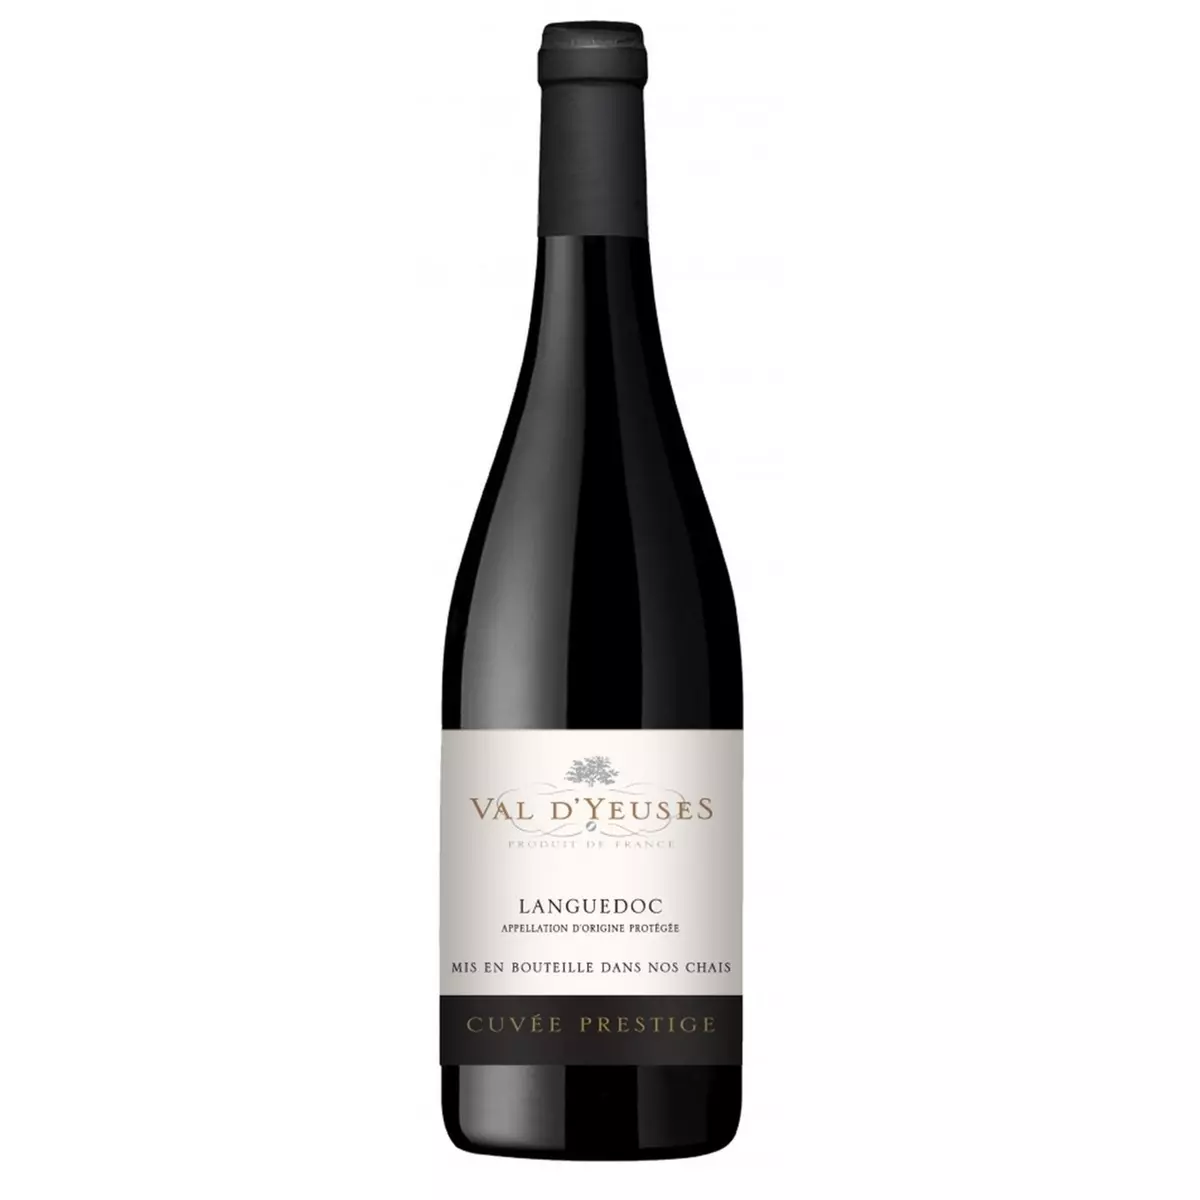 Vin rouge AOP Languedoc Val d'Yeuses 75cl